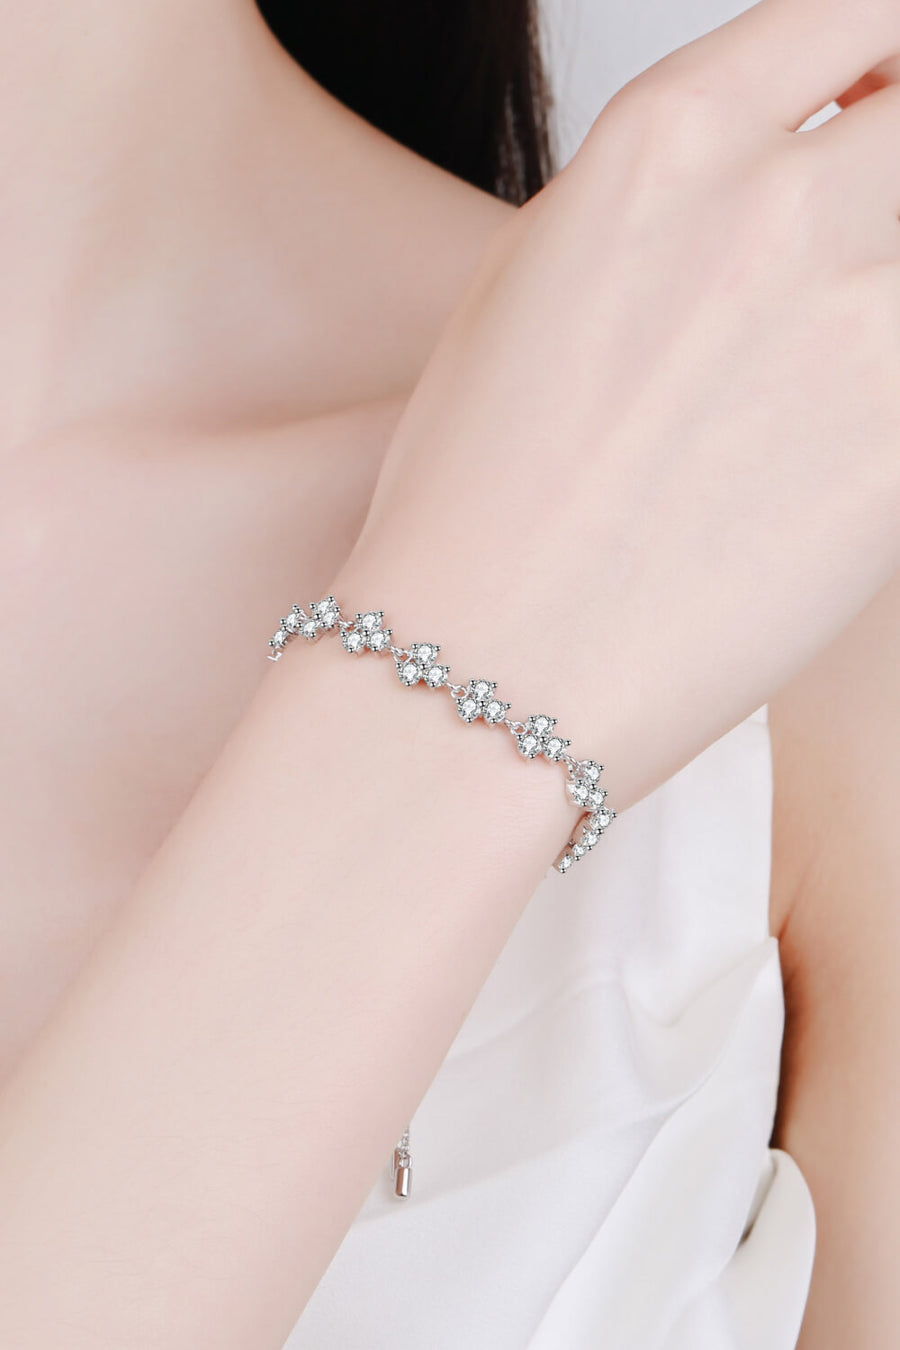 #1 BEST Diamond Chain Bracelet Jewelry Gifts for Women | #1 Best Most Top Trendy Trending 4.2 Carat Diamond Adjustable Bracelet Gift for Women, Ladies, Mother | MASON New York